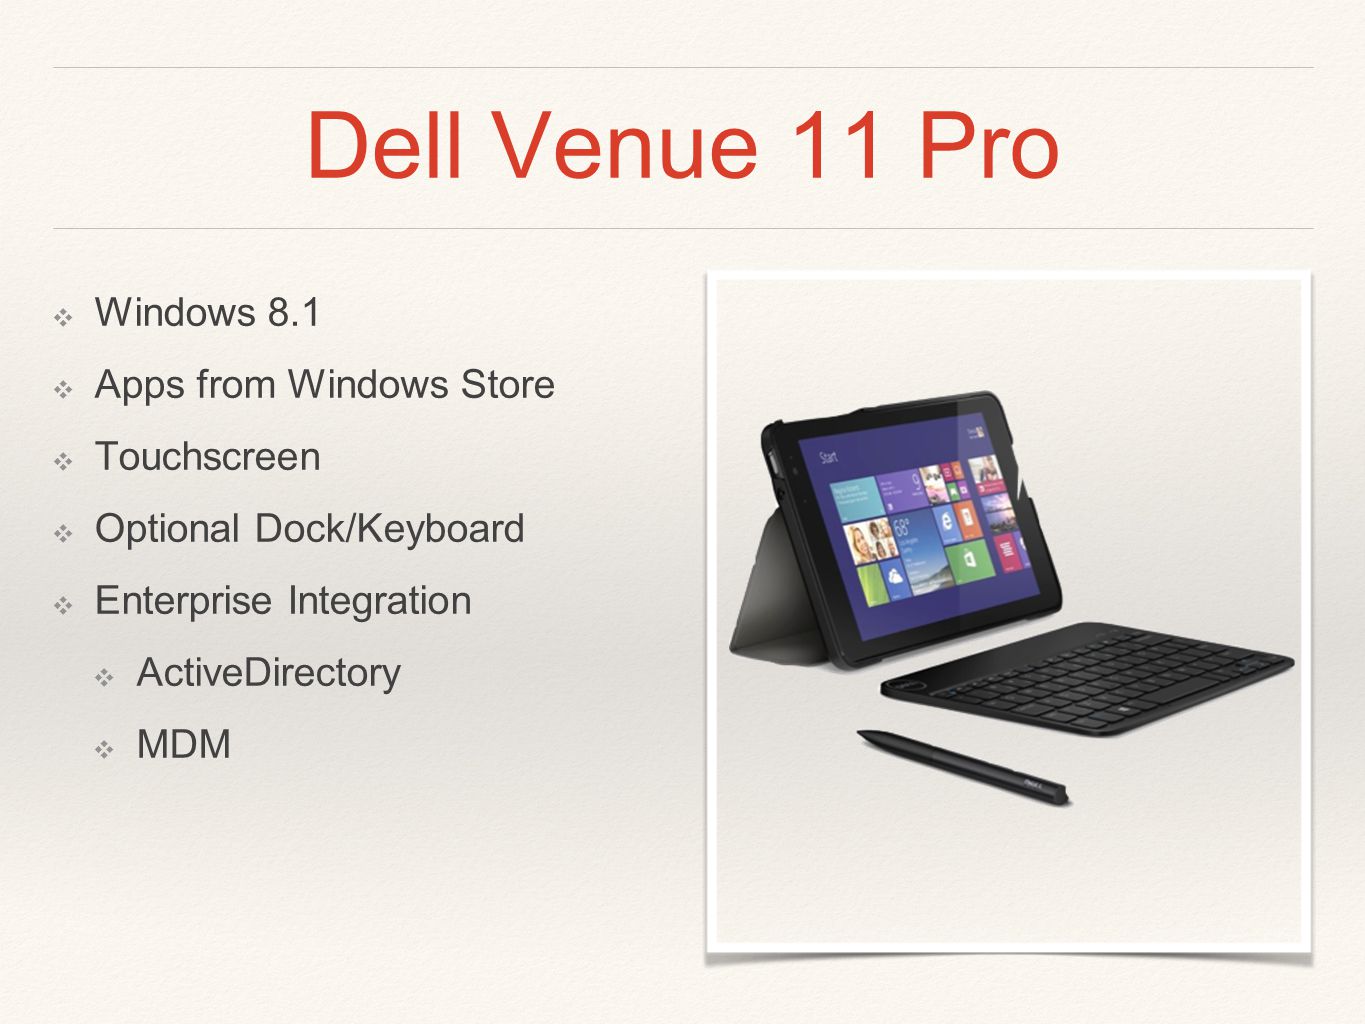 Dell Venue 11 Pro ❖ Windows 8.1 ❖ Apps from Windows Store ❖ Touchscreen ❖ Optional Dock/Keyboard ❖ Enterprise Integration ❖ ActiveDirectory ❖ MDM